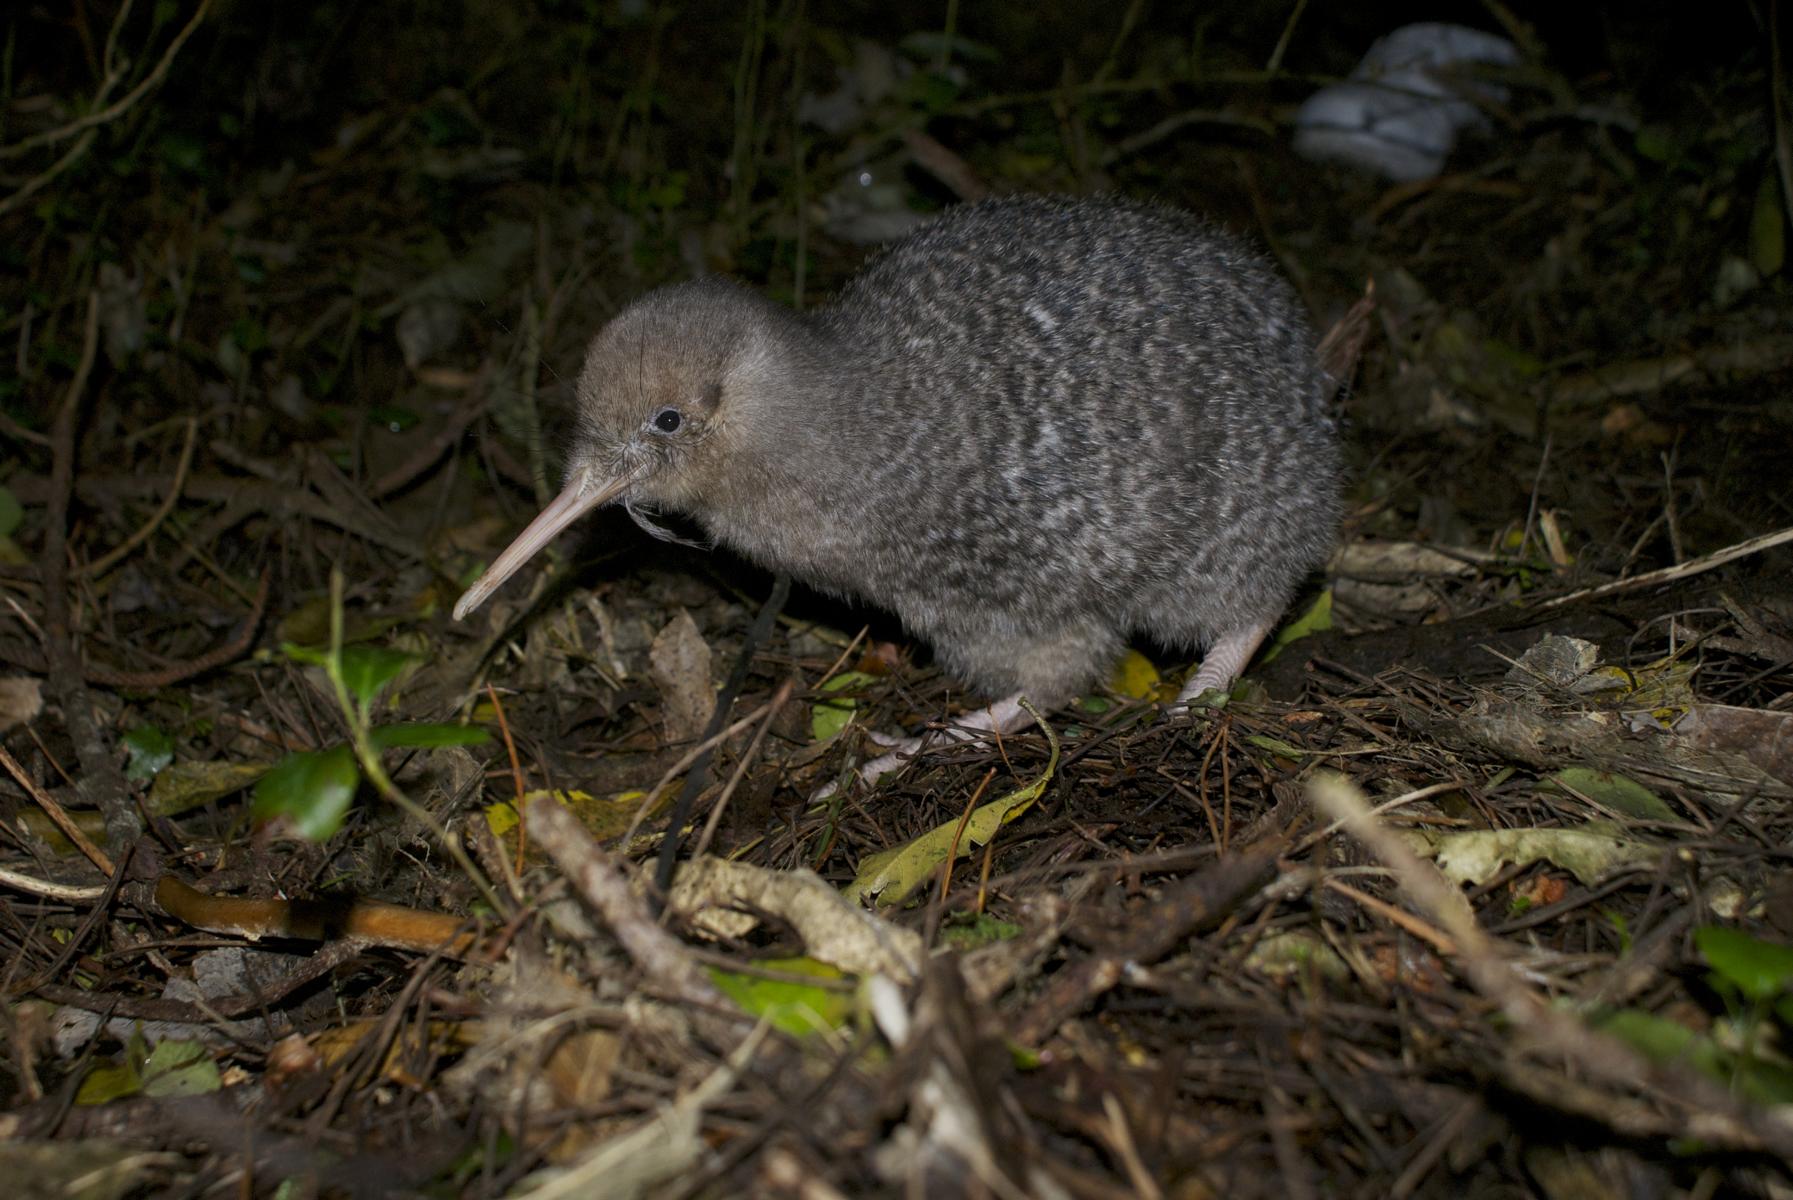 Little Spotted Kiwi at night, Zealandia, Wellington, New Zealand - Night Tour Through Zealandia